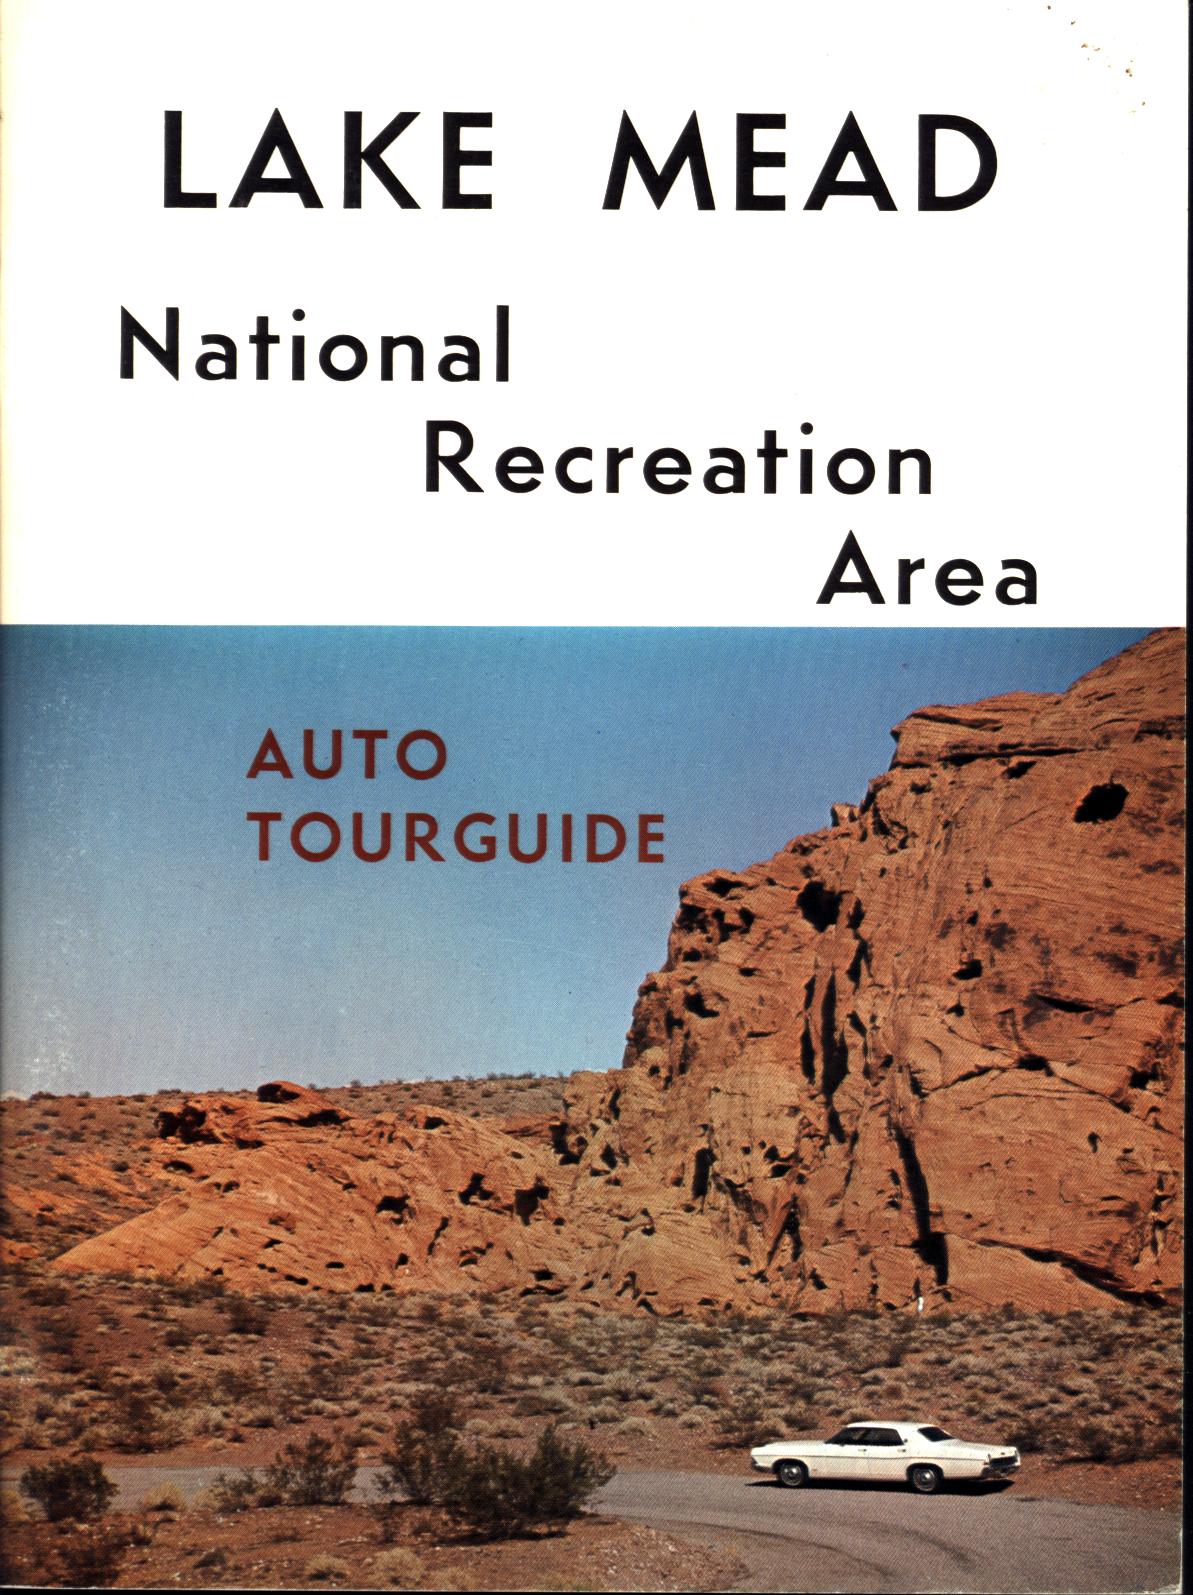 LAKE MEAD NATIONAL RECREATION AREA: auto tour guide. 